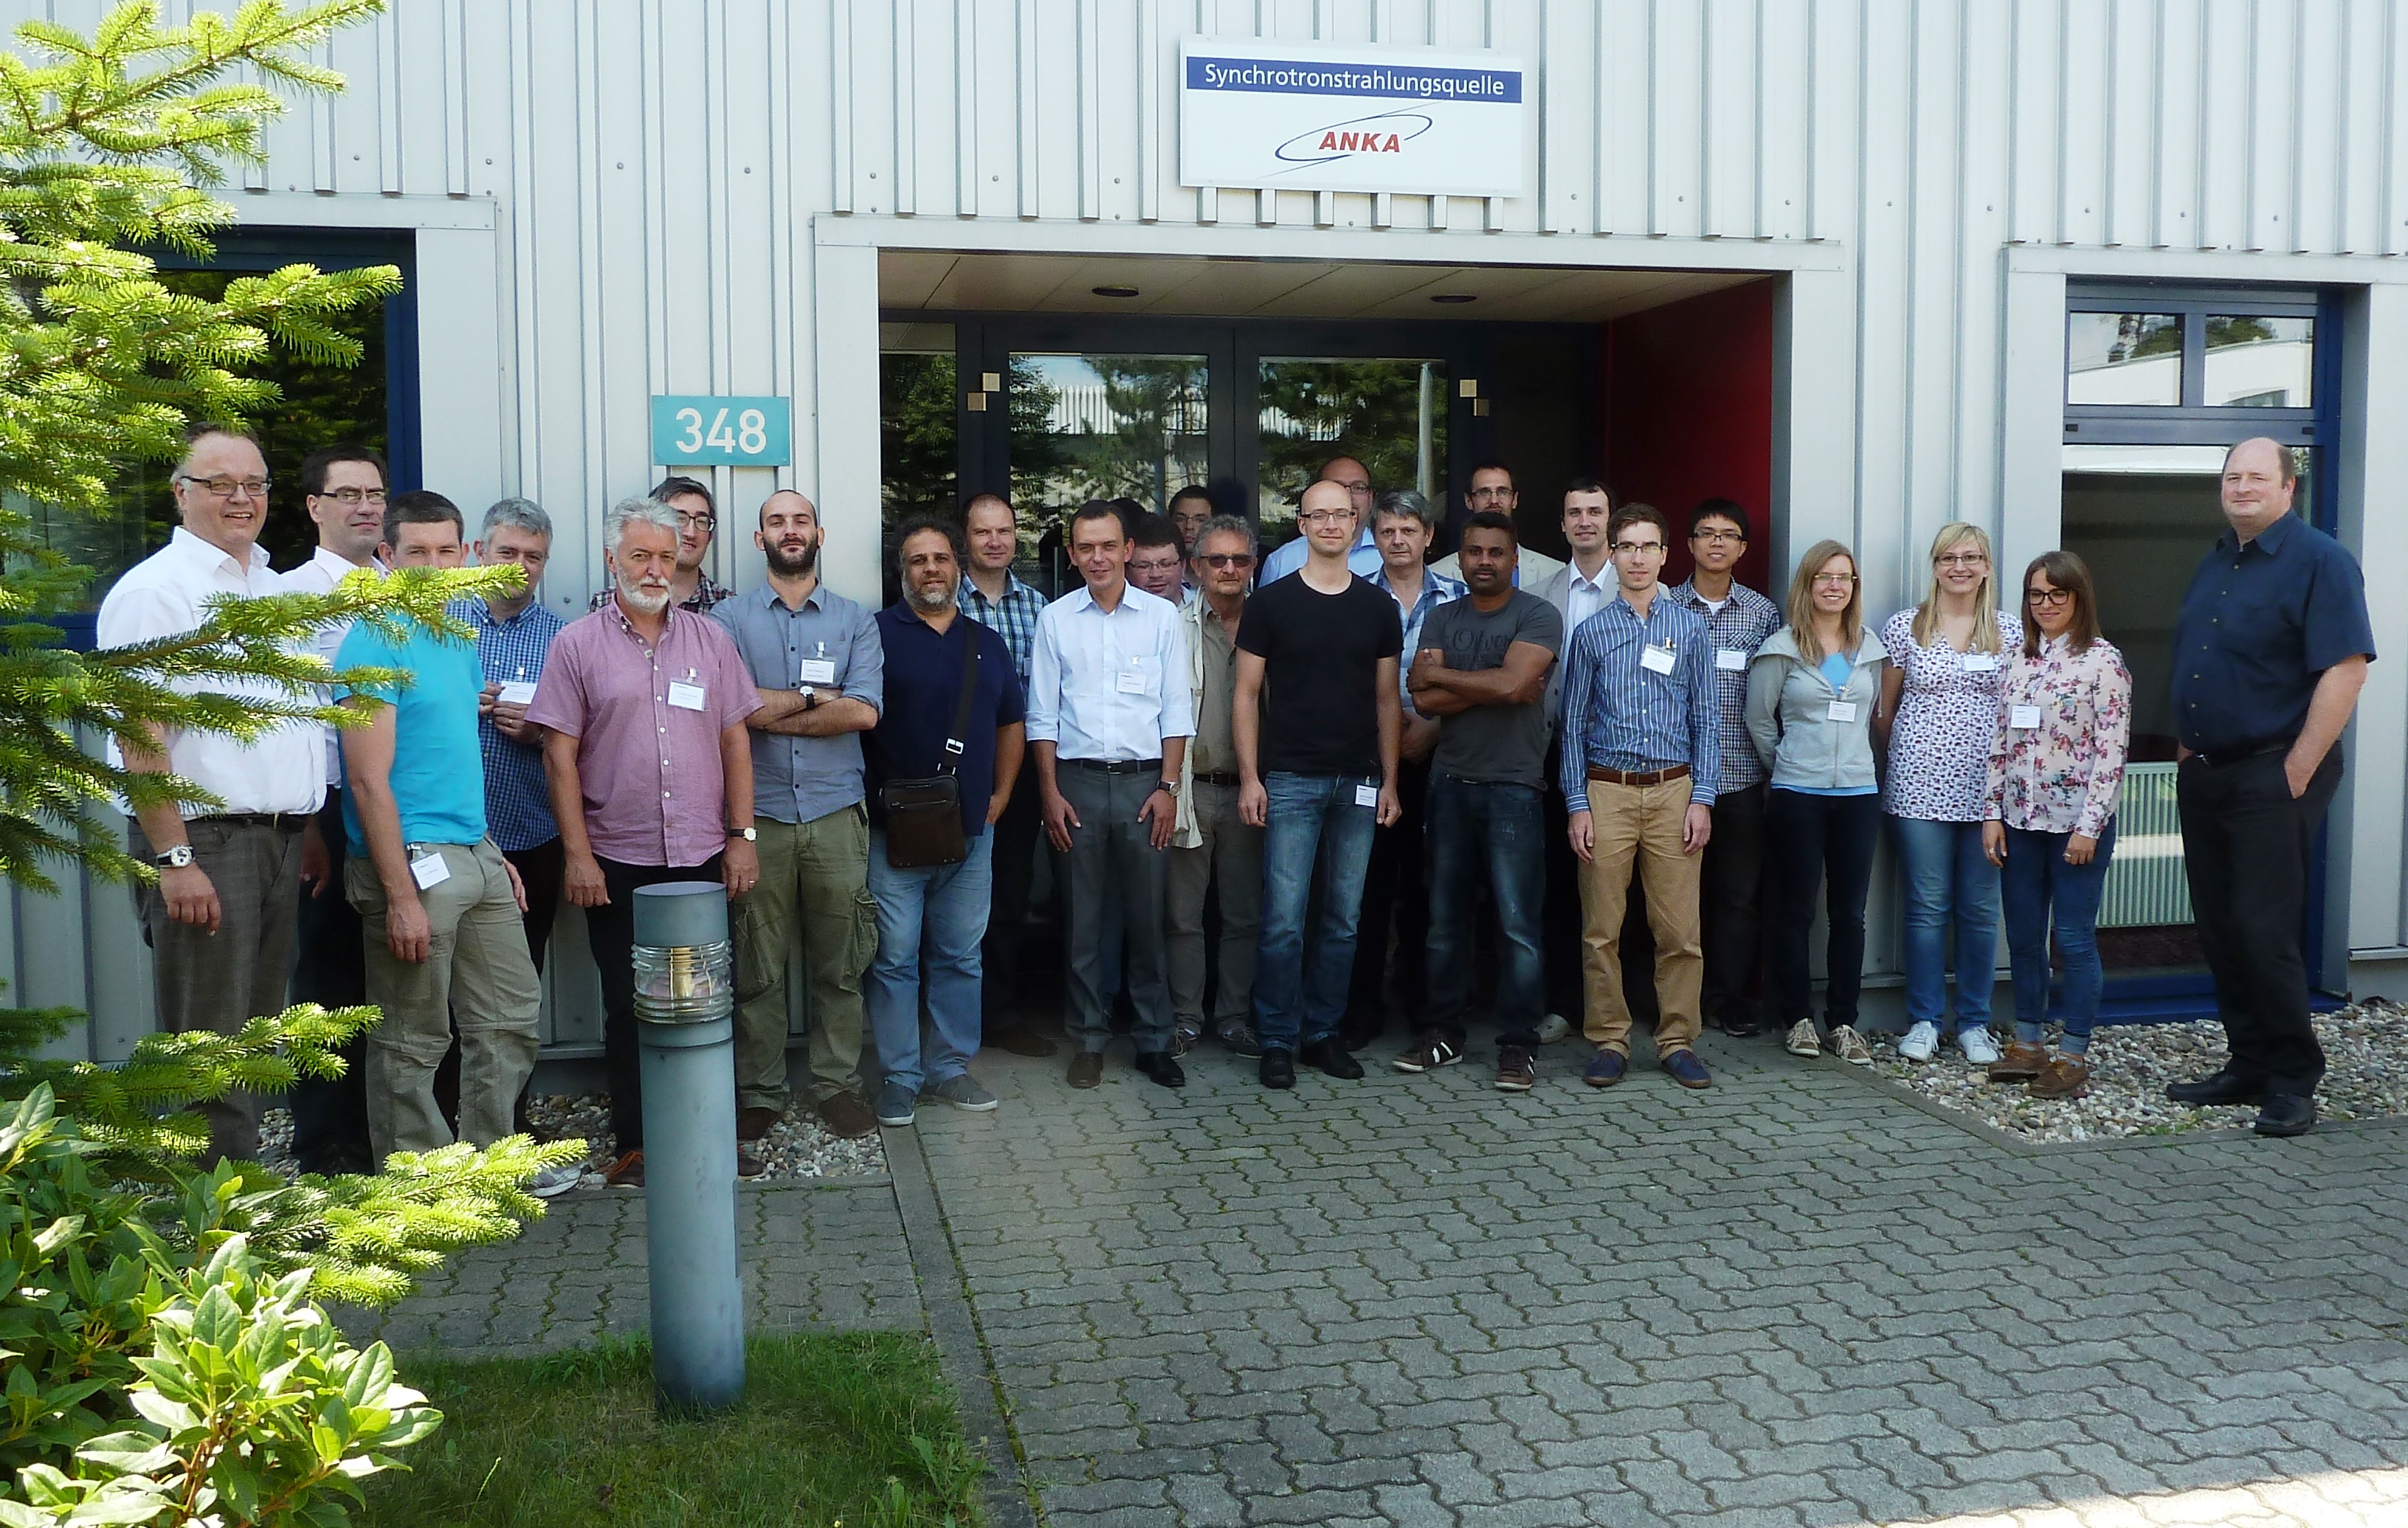 Participants of the 3rd European Rigaku SmartLab Workshop at KIT/Anka in Karlsruhe, Germany